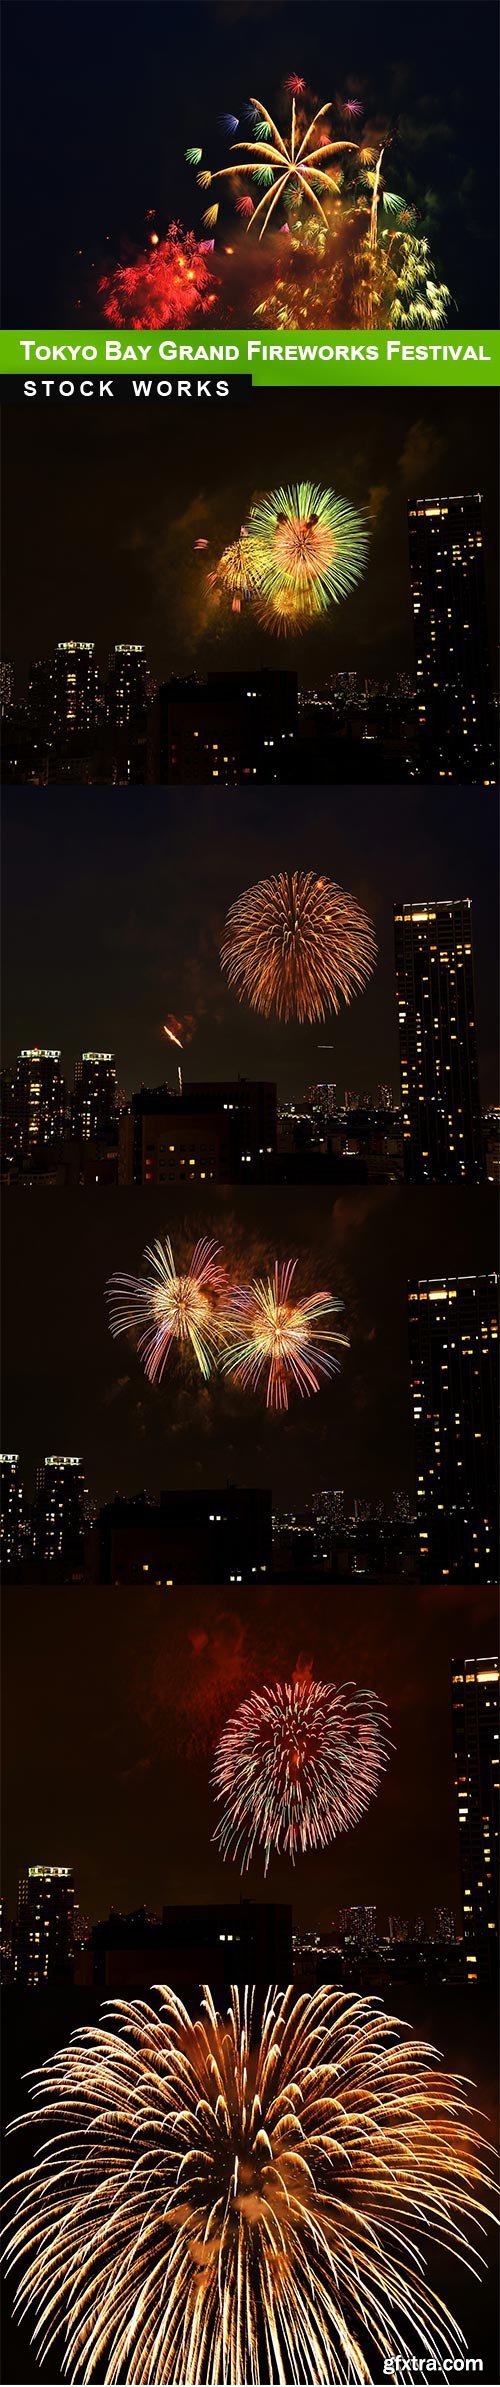 Tokyo Bay Grand Fireworks Festival - 6 UHQ JPEG